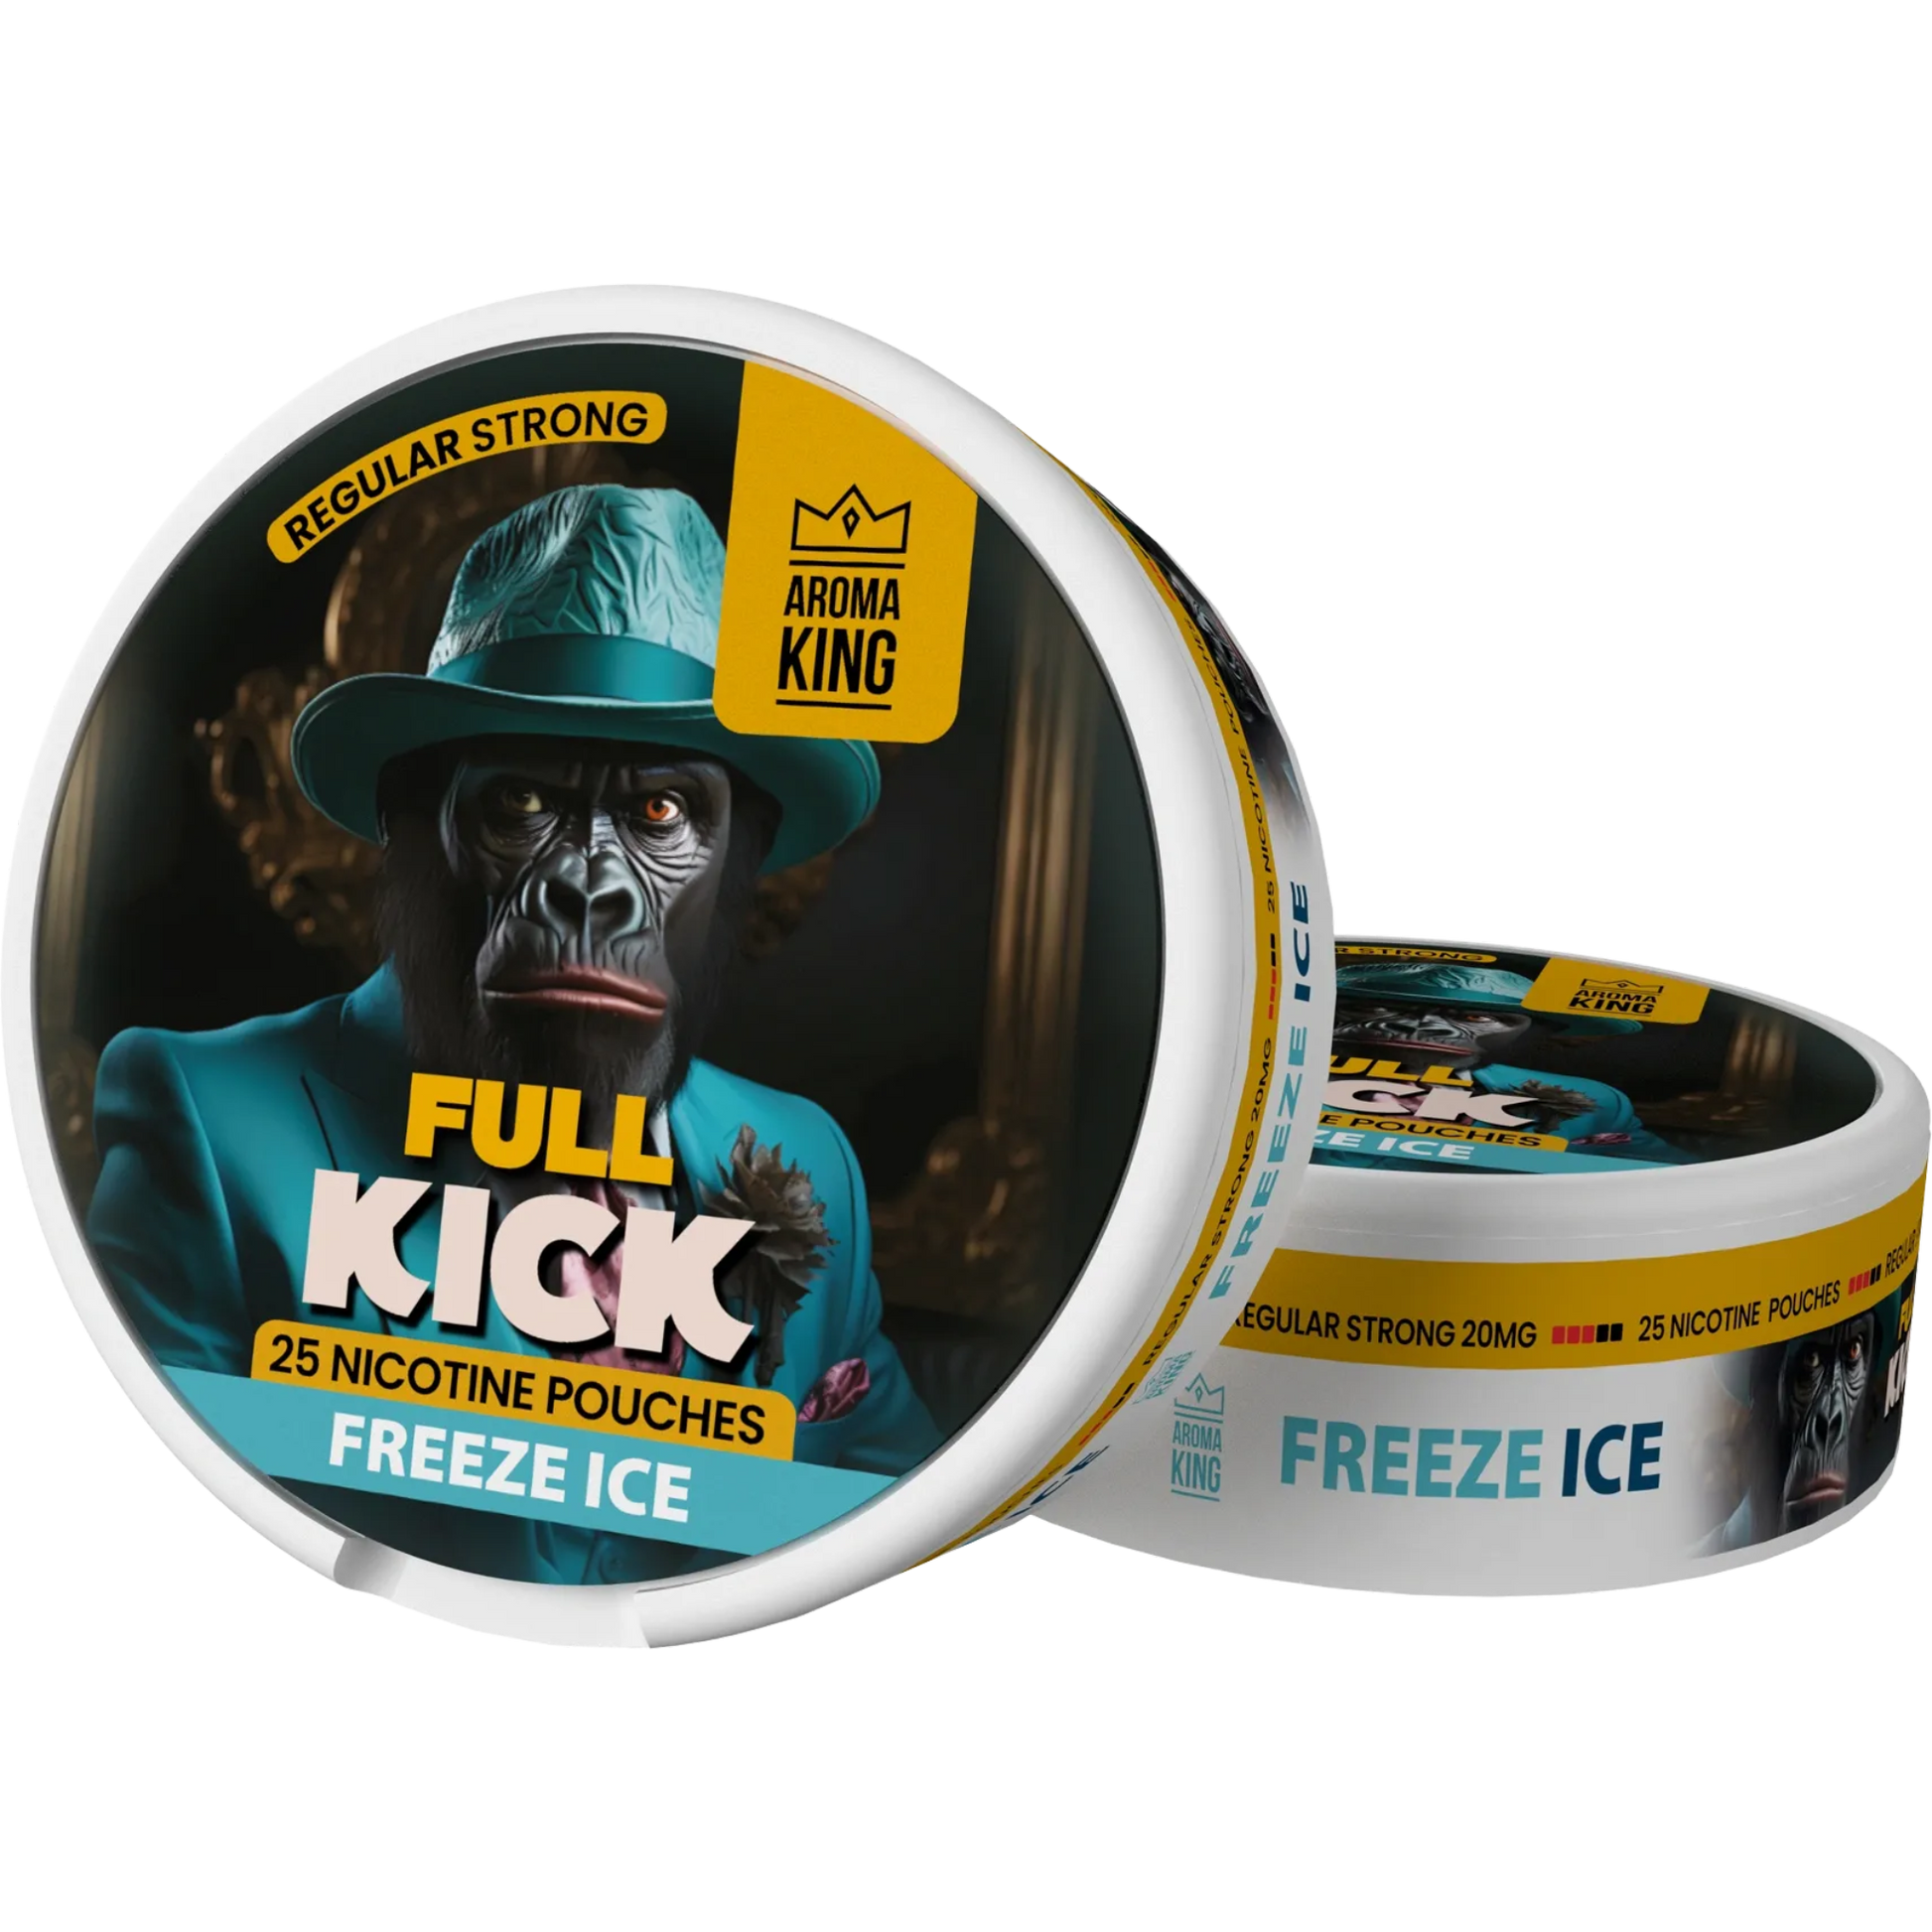 Aroma King Full Kick Freeze Ice - 20mg